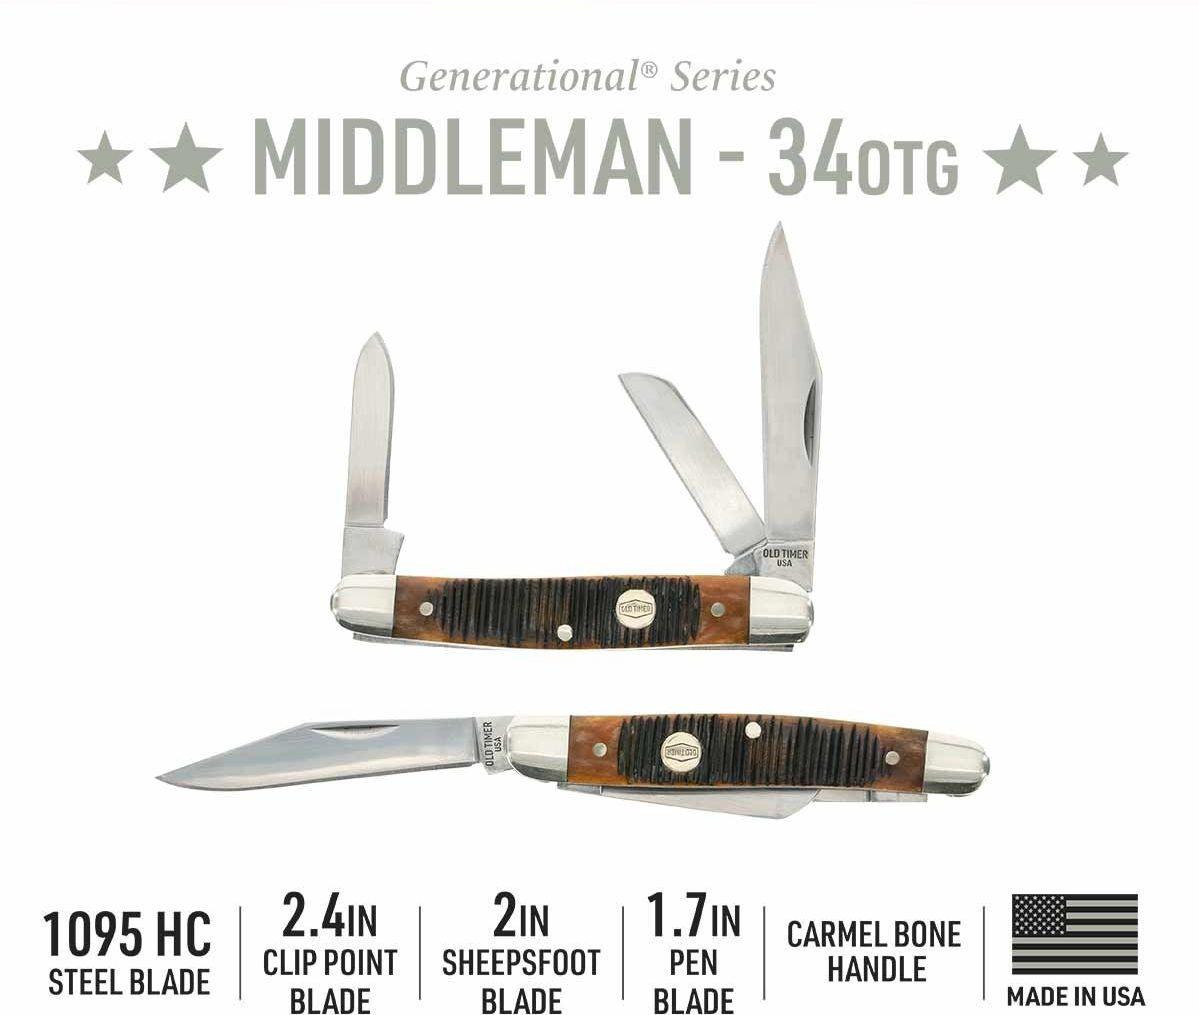 Generational Series - Middleman 34OTG